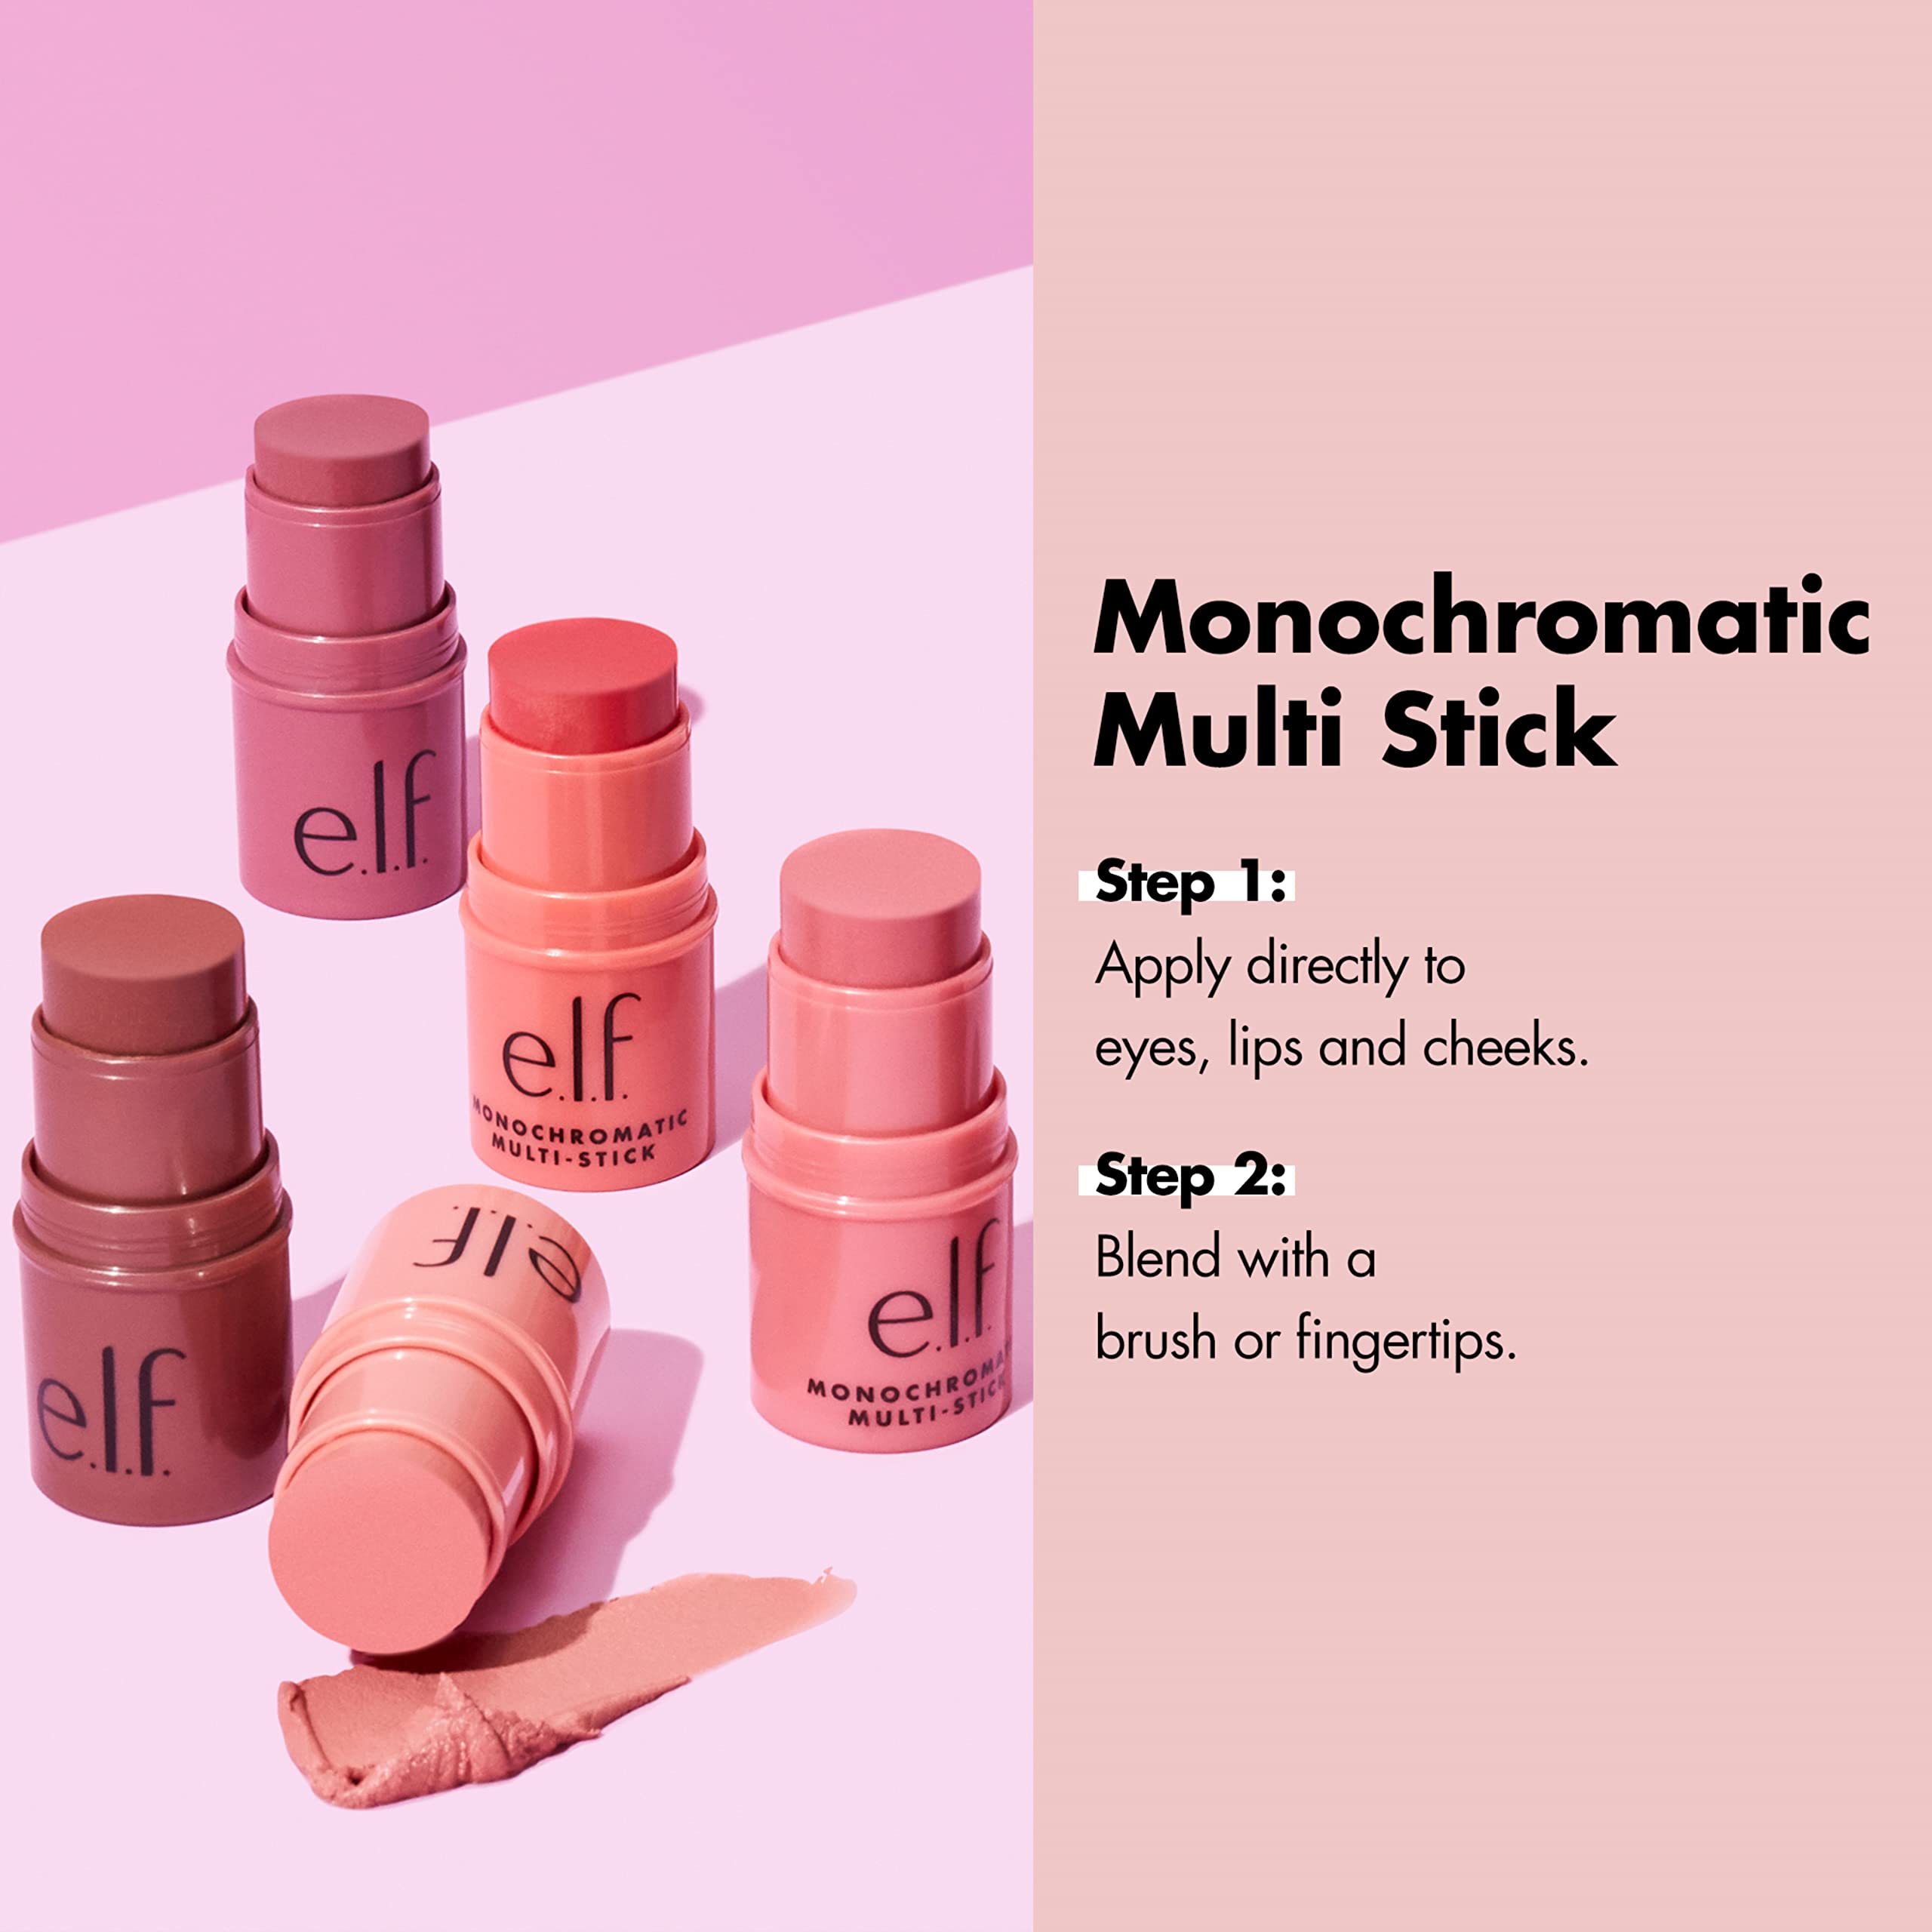 e.l.f. Monochromatic Multi Stick, Luxuriously Creamy & Blendable Color, For Eyes, Lips & Cheeks, Vegan & Cruelty-Free, Bronzed Cherry, 0.155 Oz